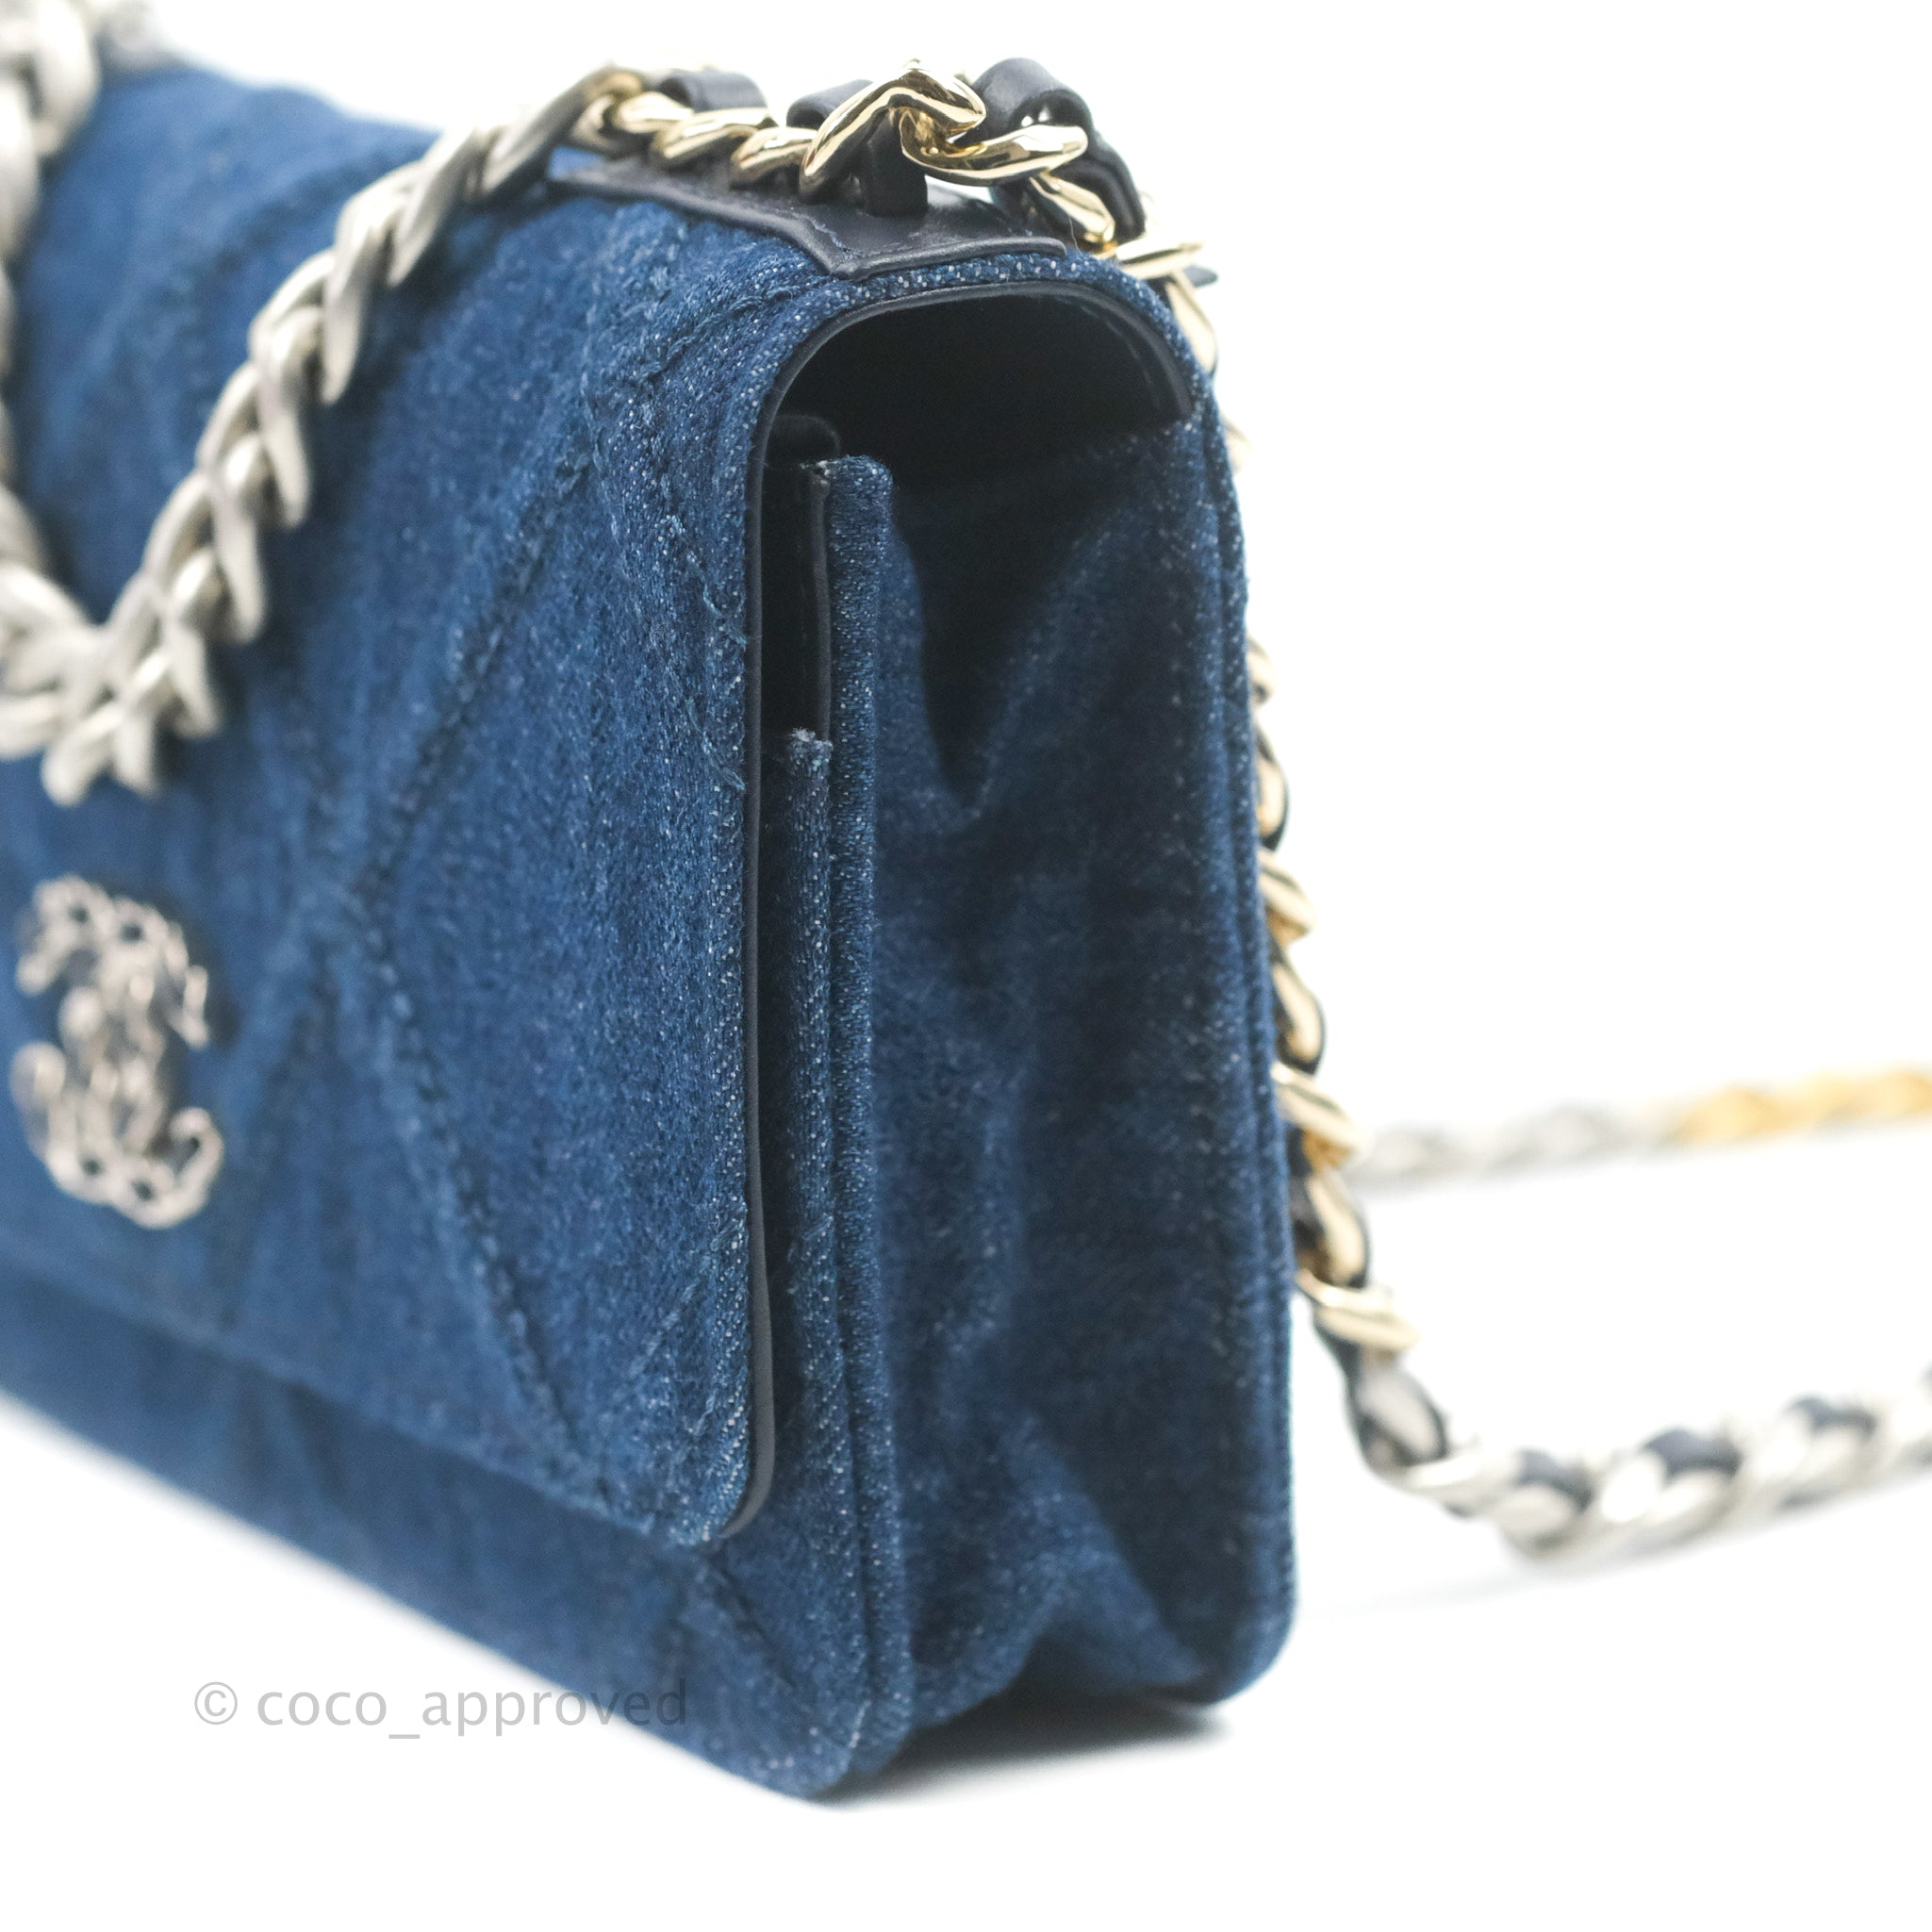 Snag the Latest CHANEL Denim Exterior Small Bags & Handbags for